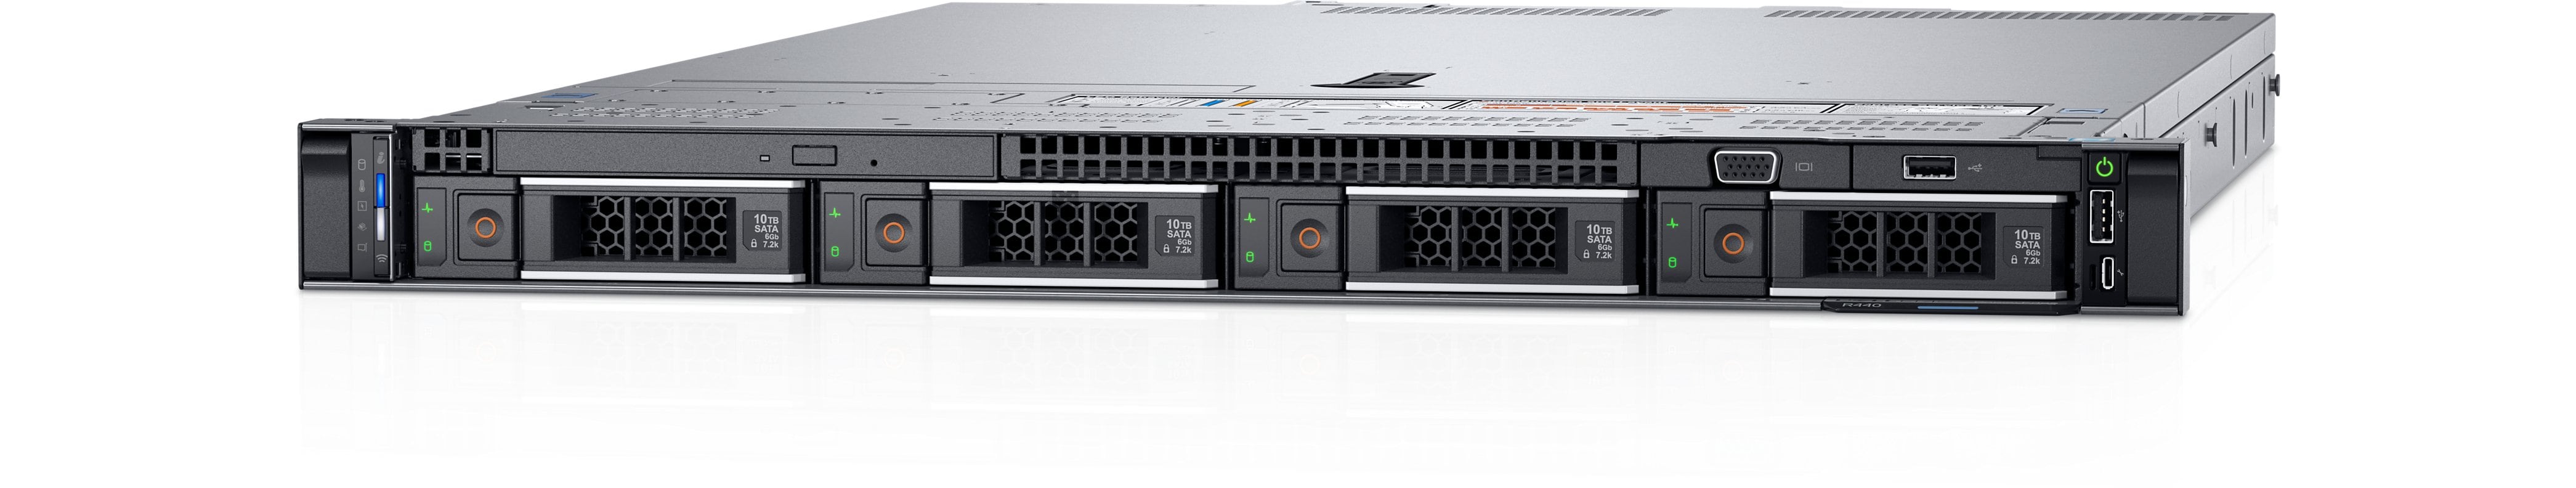 Dell PowerEdge R440 Rack Server - Benson Computers